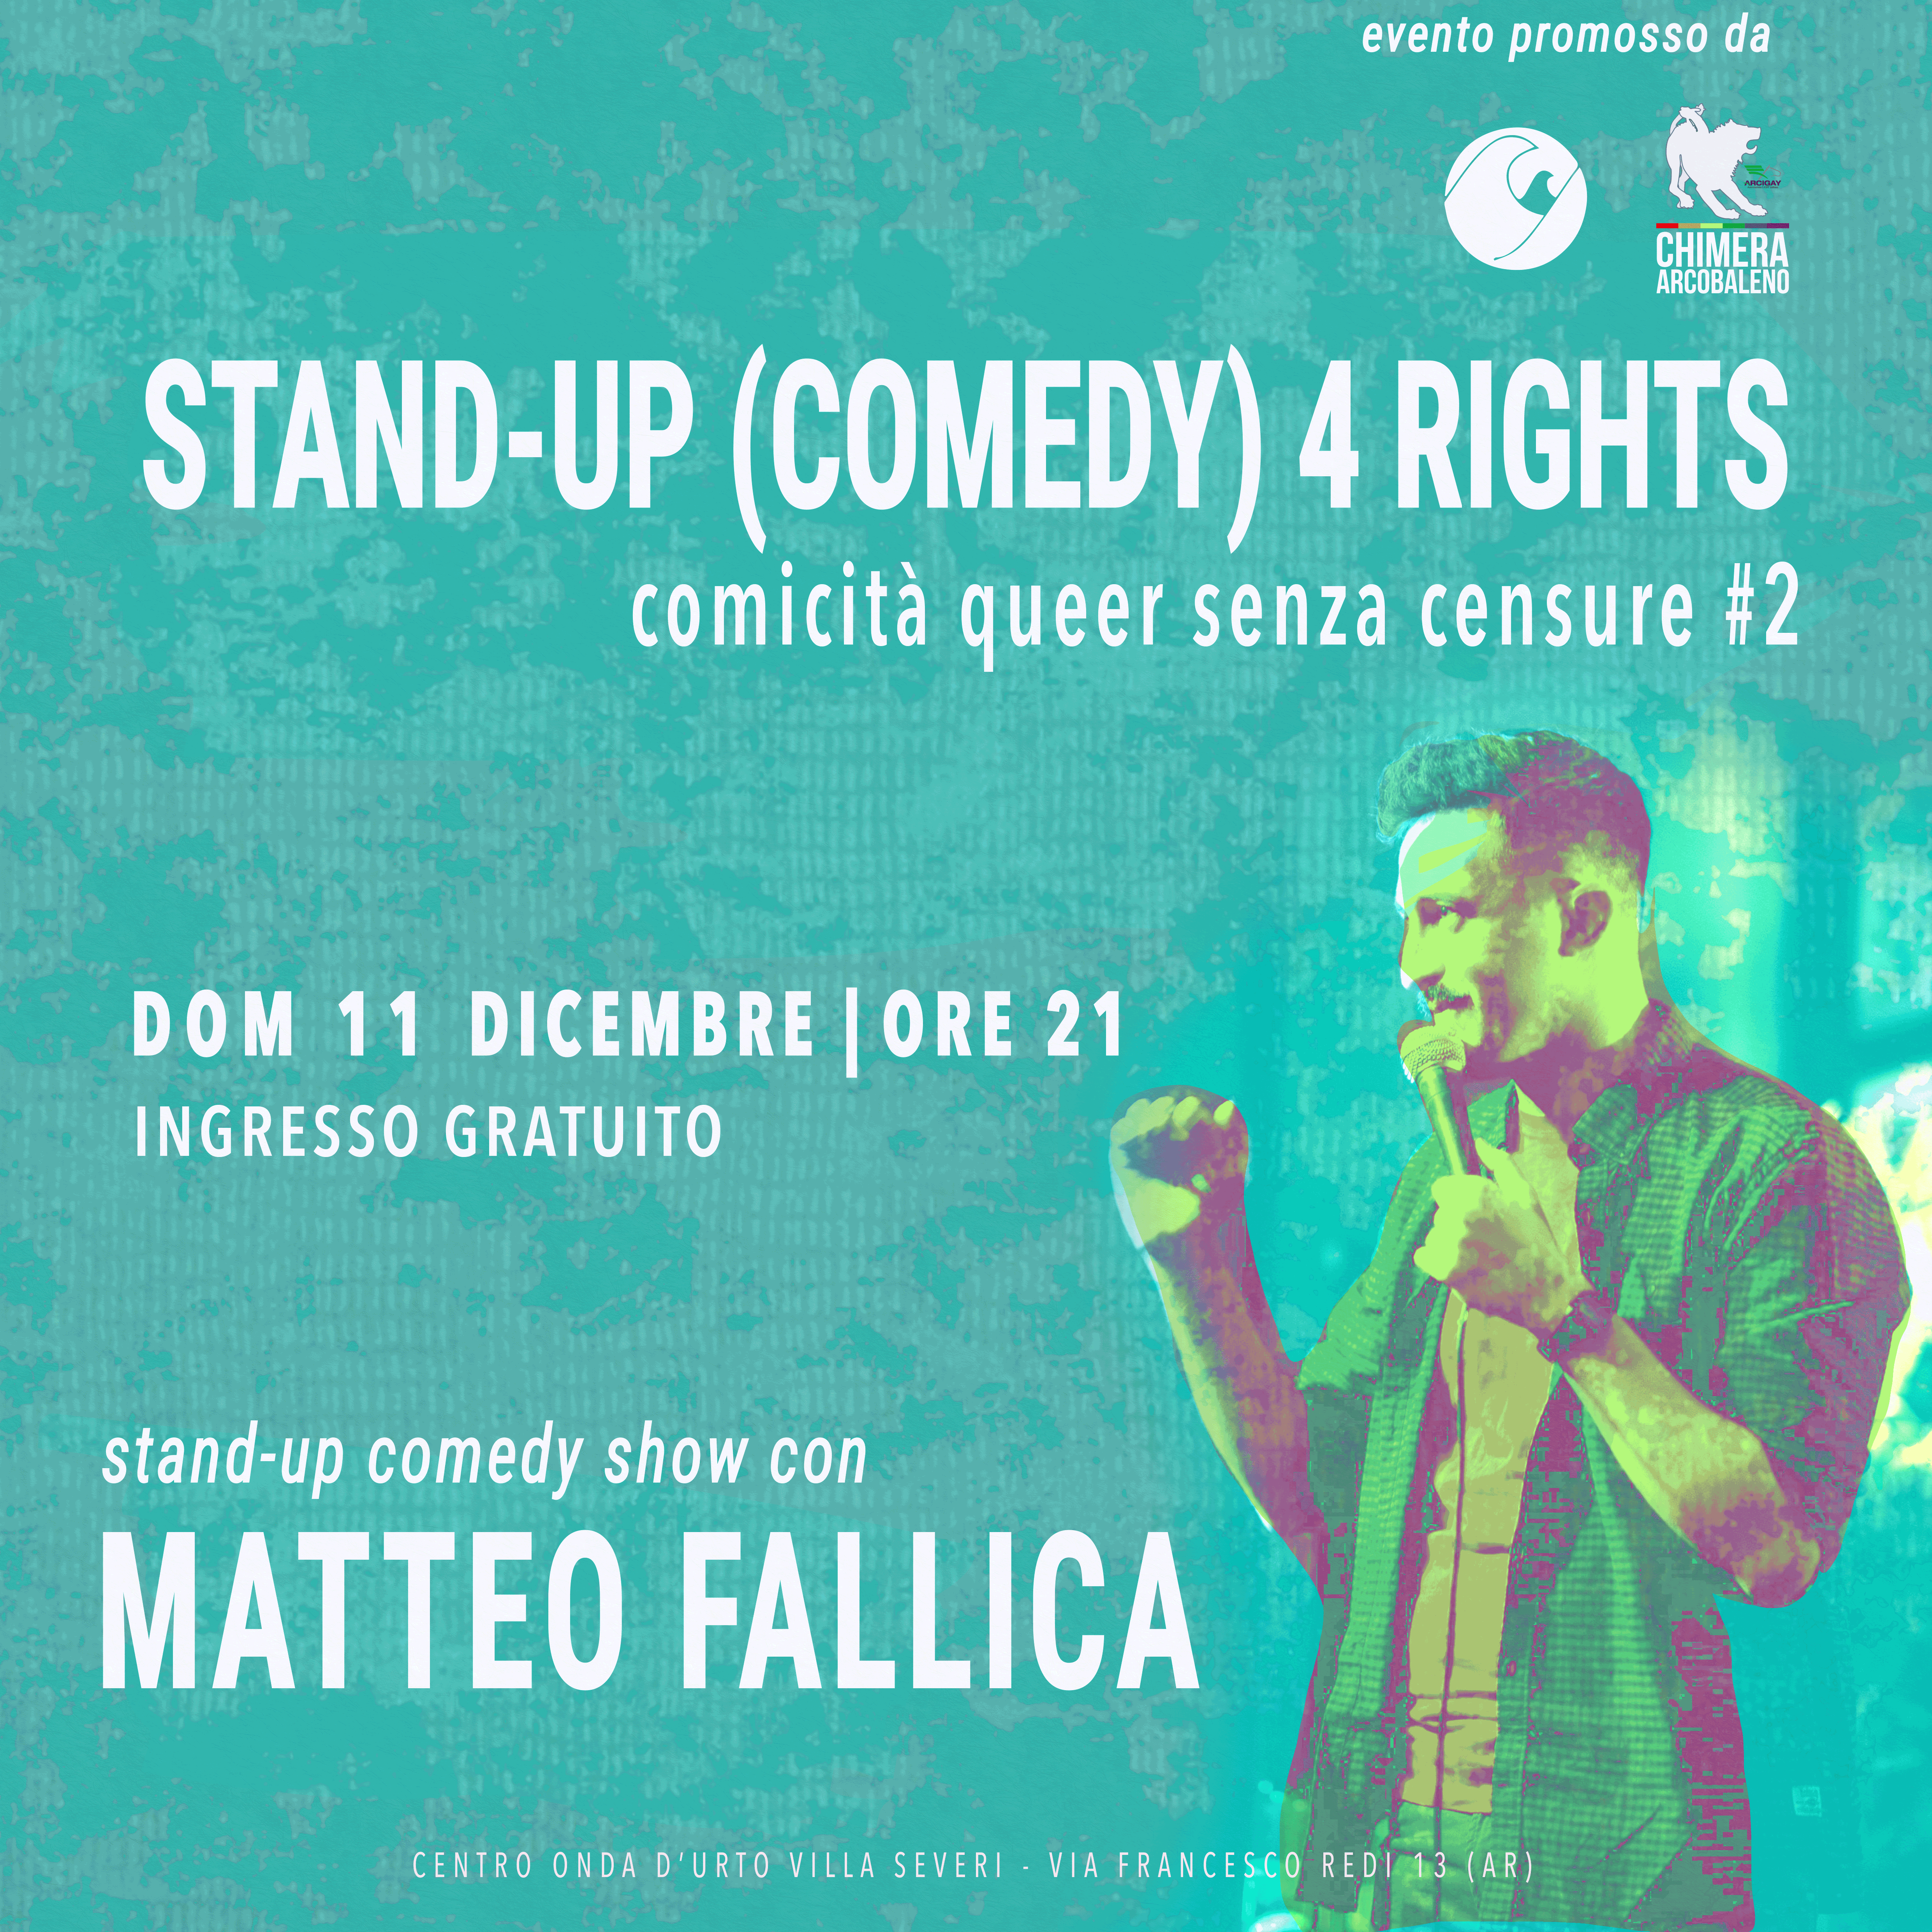 STAND-UP (comedy) 4 RIGHTS #2 con MATTEO FALLICA